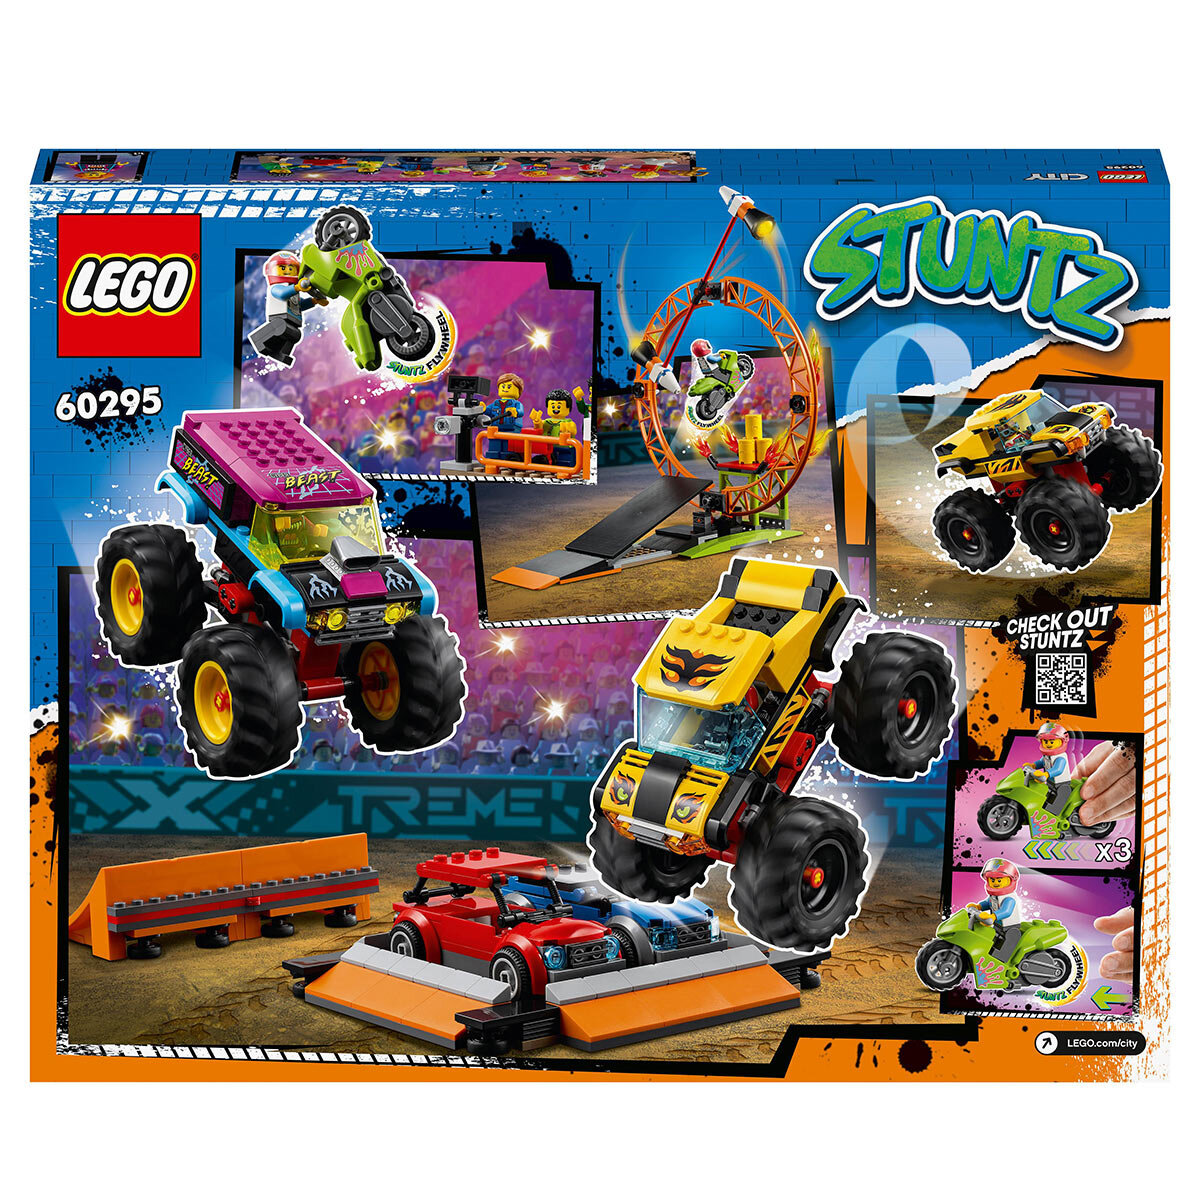 Buy LEGO City Stunt Show Arena Back of Box Image at Costco.co.uk